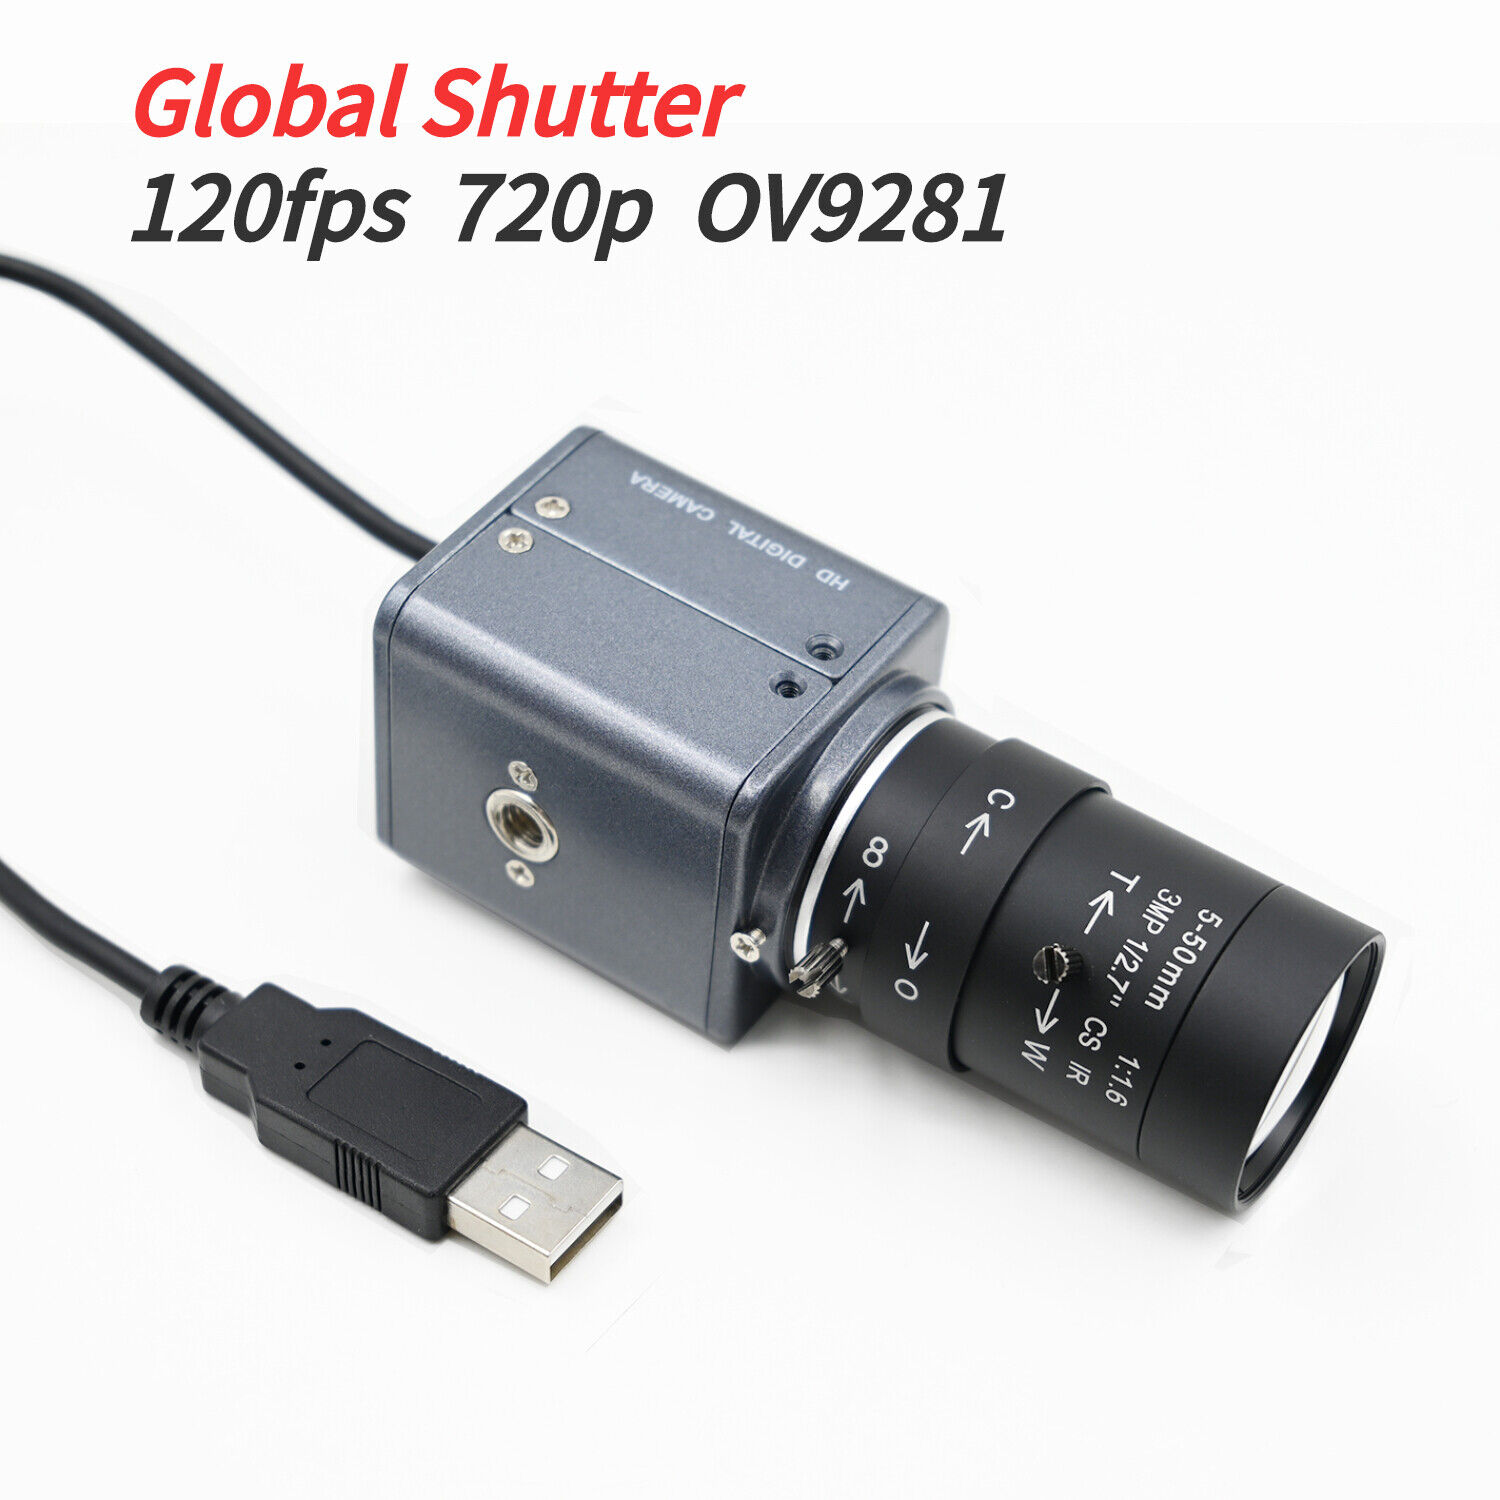 120FPS Global Shutter USB Camera 720P OV9281 Webcam With 5-50mm 2.8-12mm CS lens